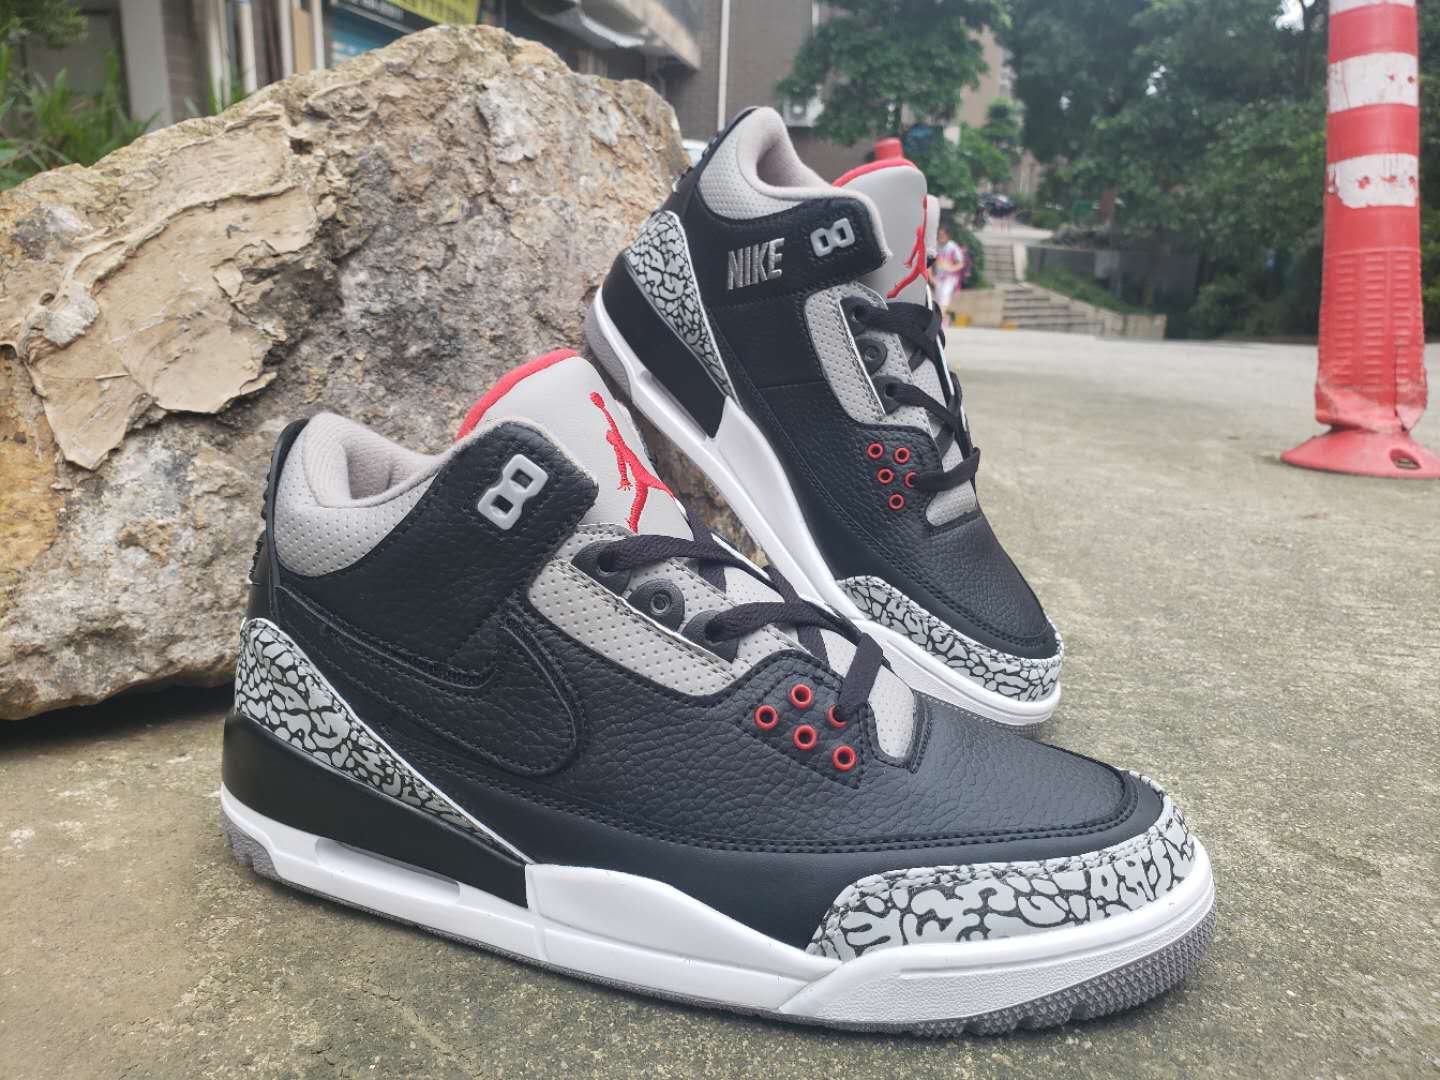 2019 Air Jordan 3 Retro Black Red Cement Grey Shoes